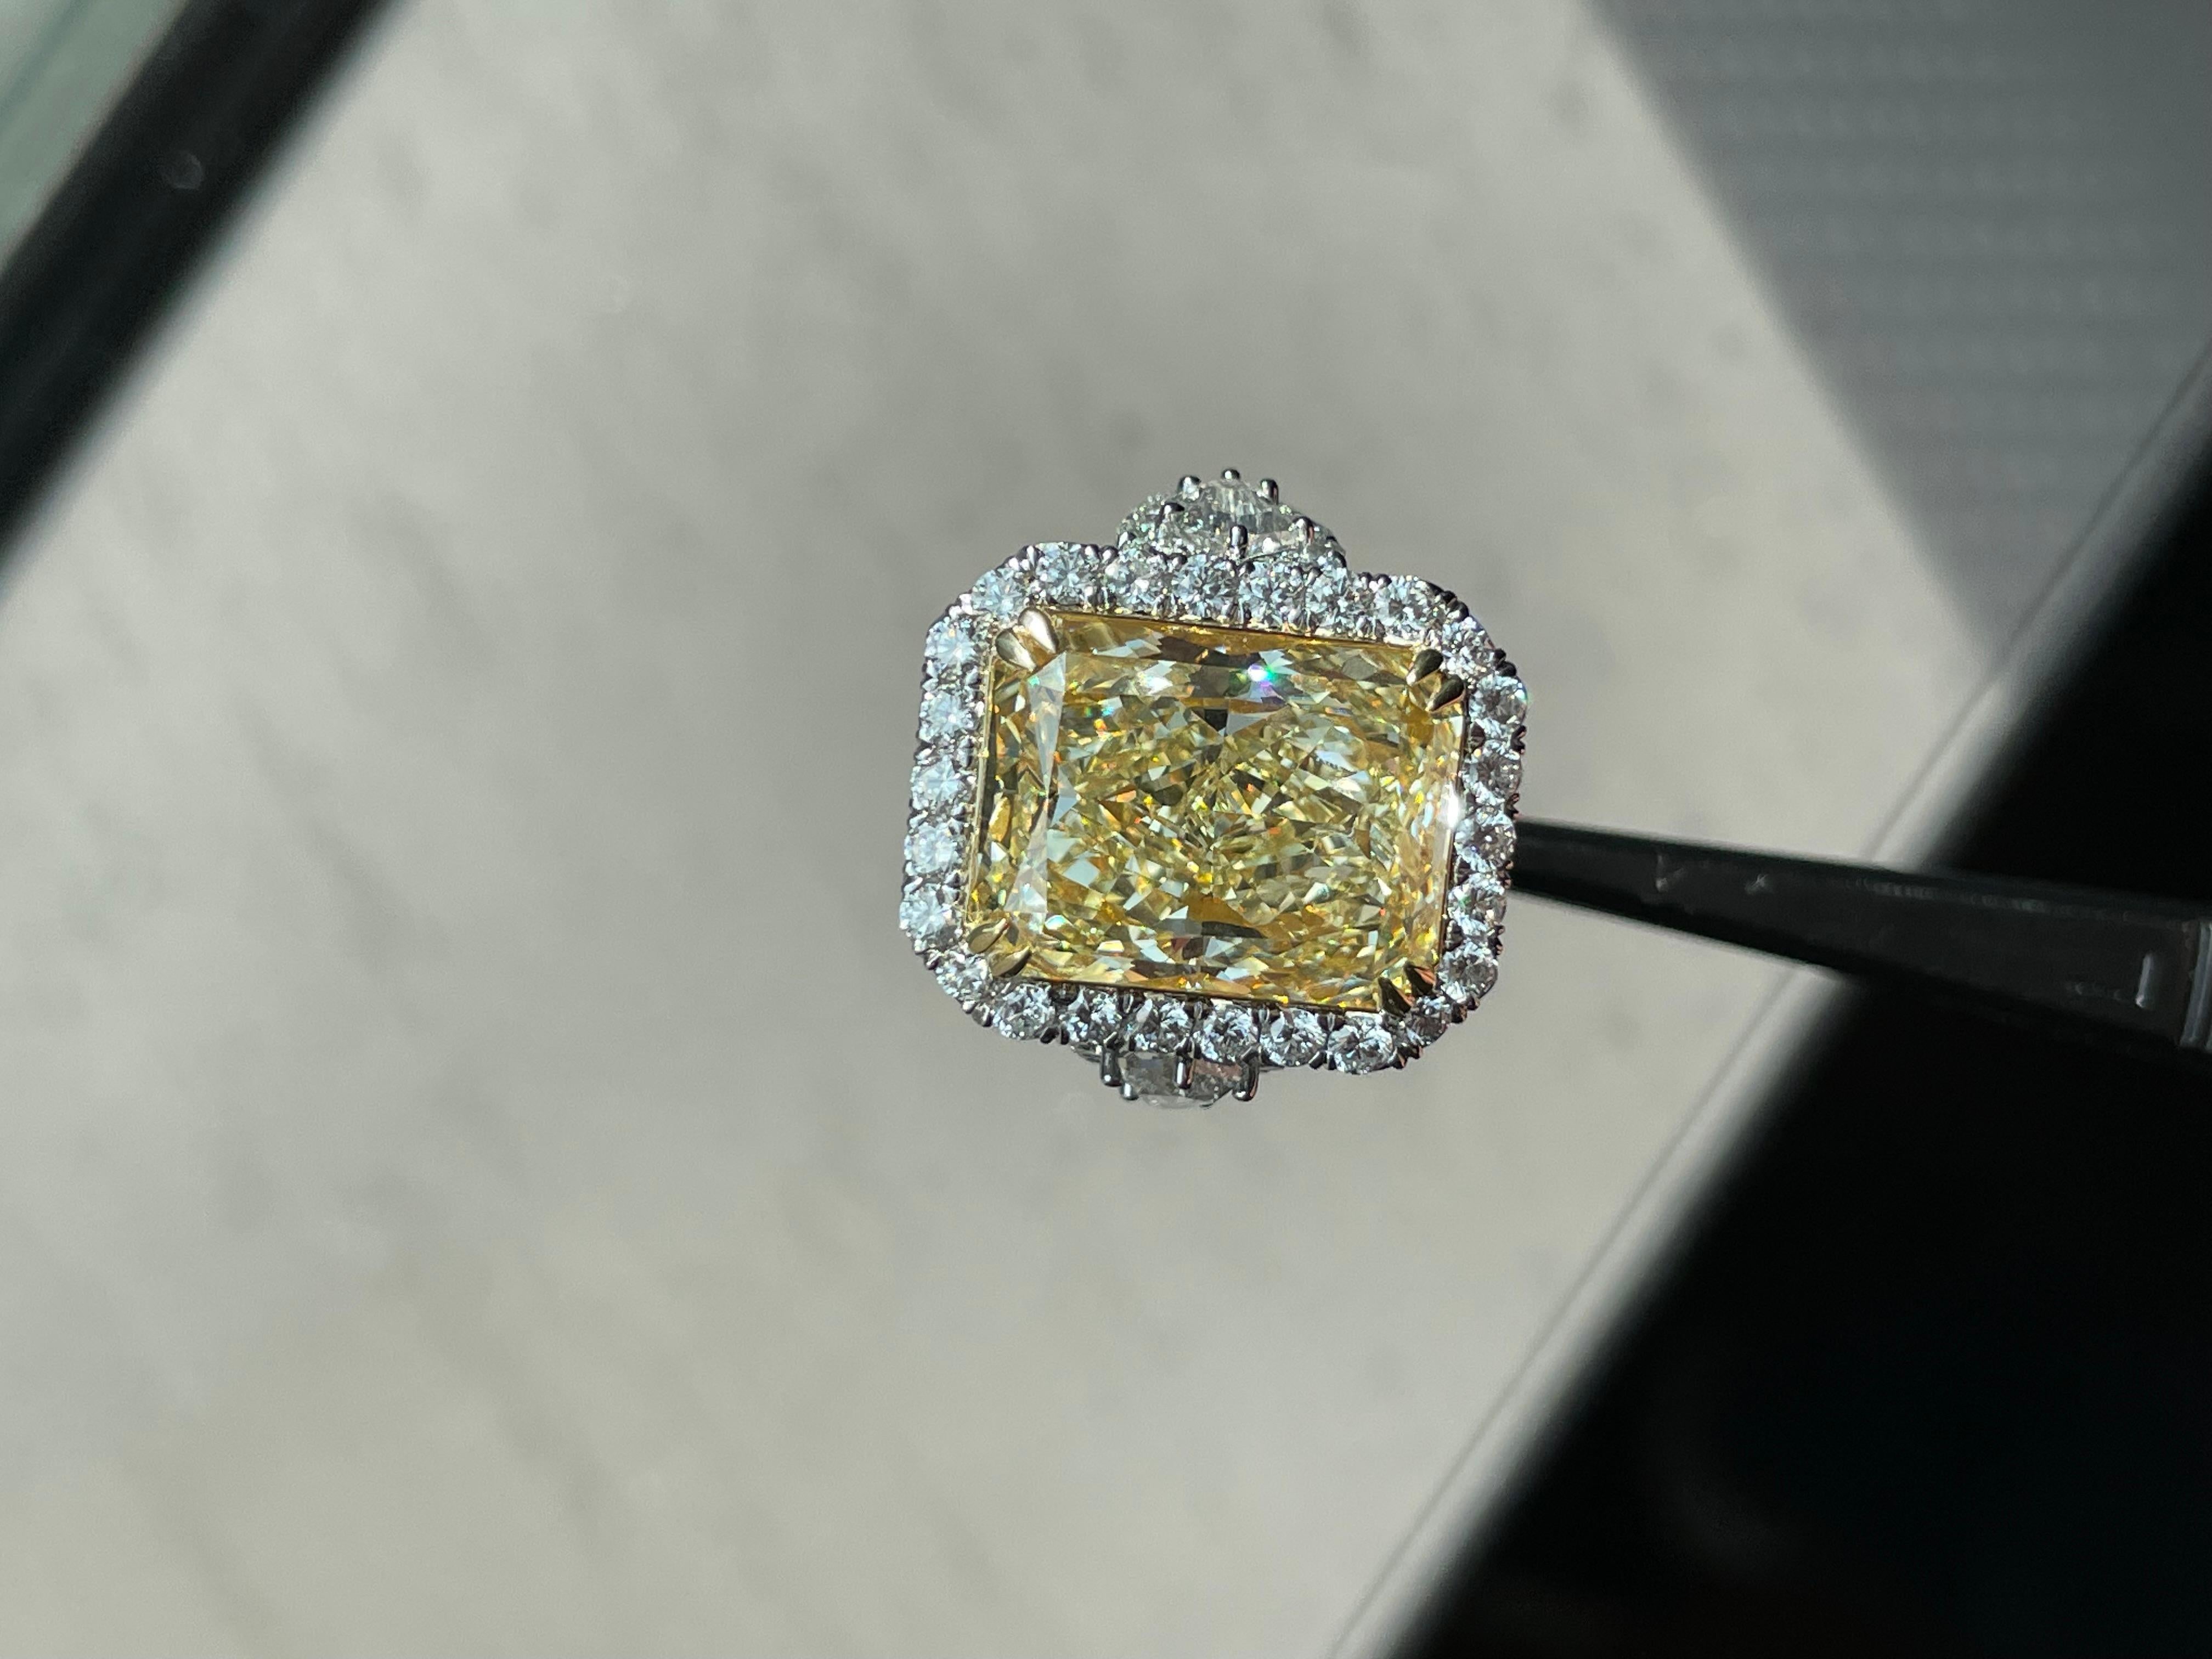 Extraordinary 12.12 Carat Fancy Light Yellow Radiant Cut Engagement Ring 

Setting:
Platinum/18K

Center Stone: Fancy Light Yellow
Carat Weight: 12.12
Clarity: VS1

Side Stones: Shield Cut Diamonds & Round Diamonds
Color: F-G
Clarity: VS
Cut: